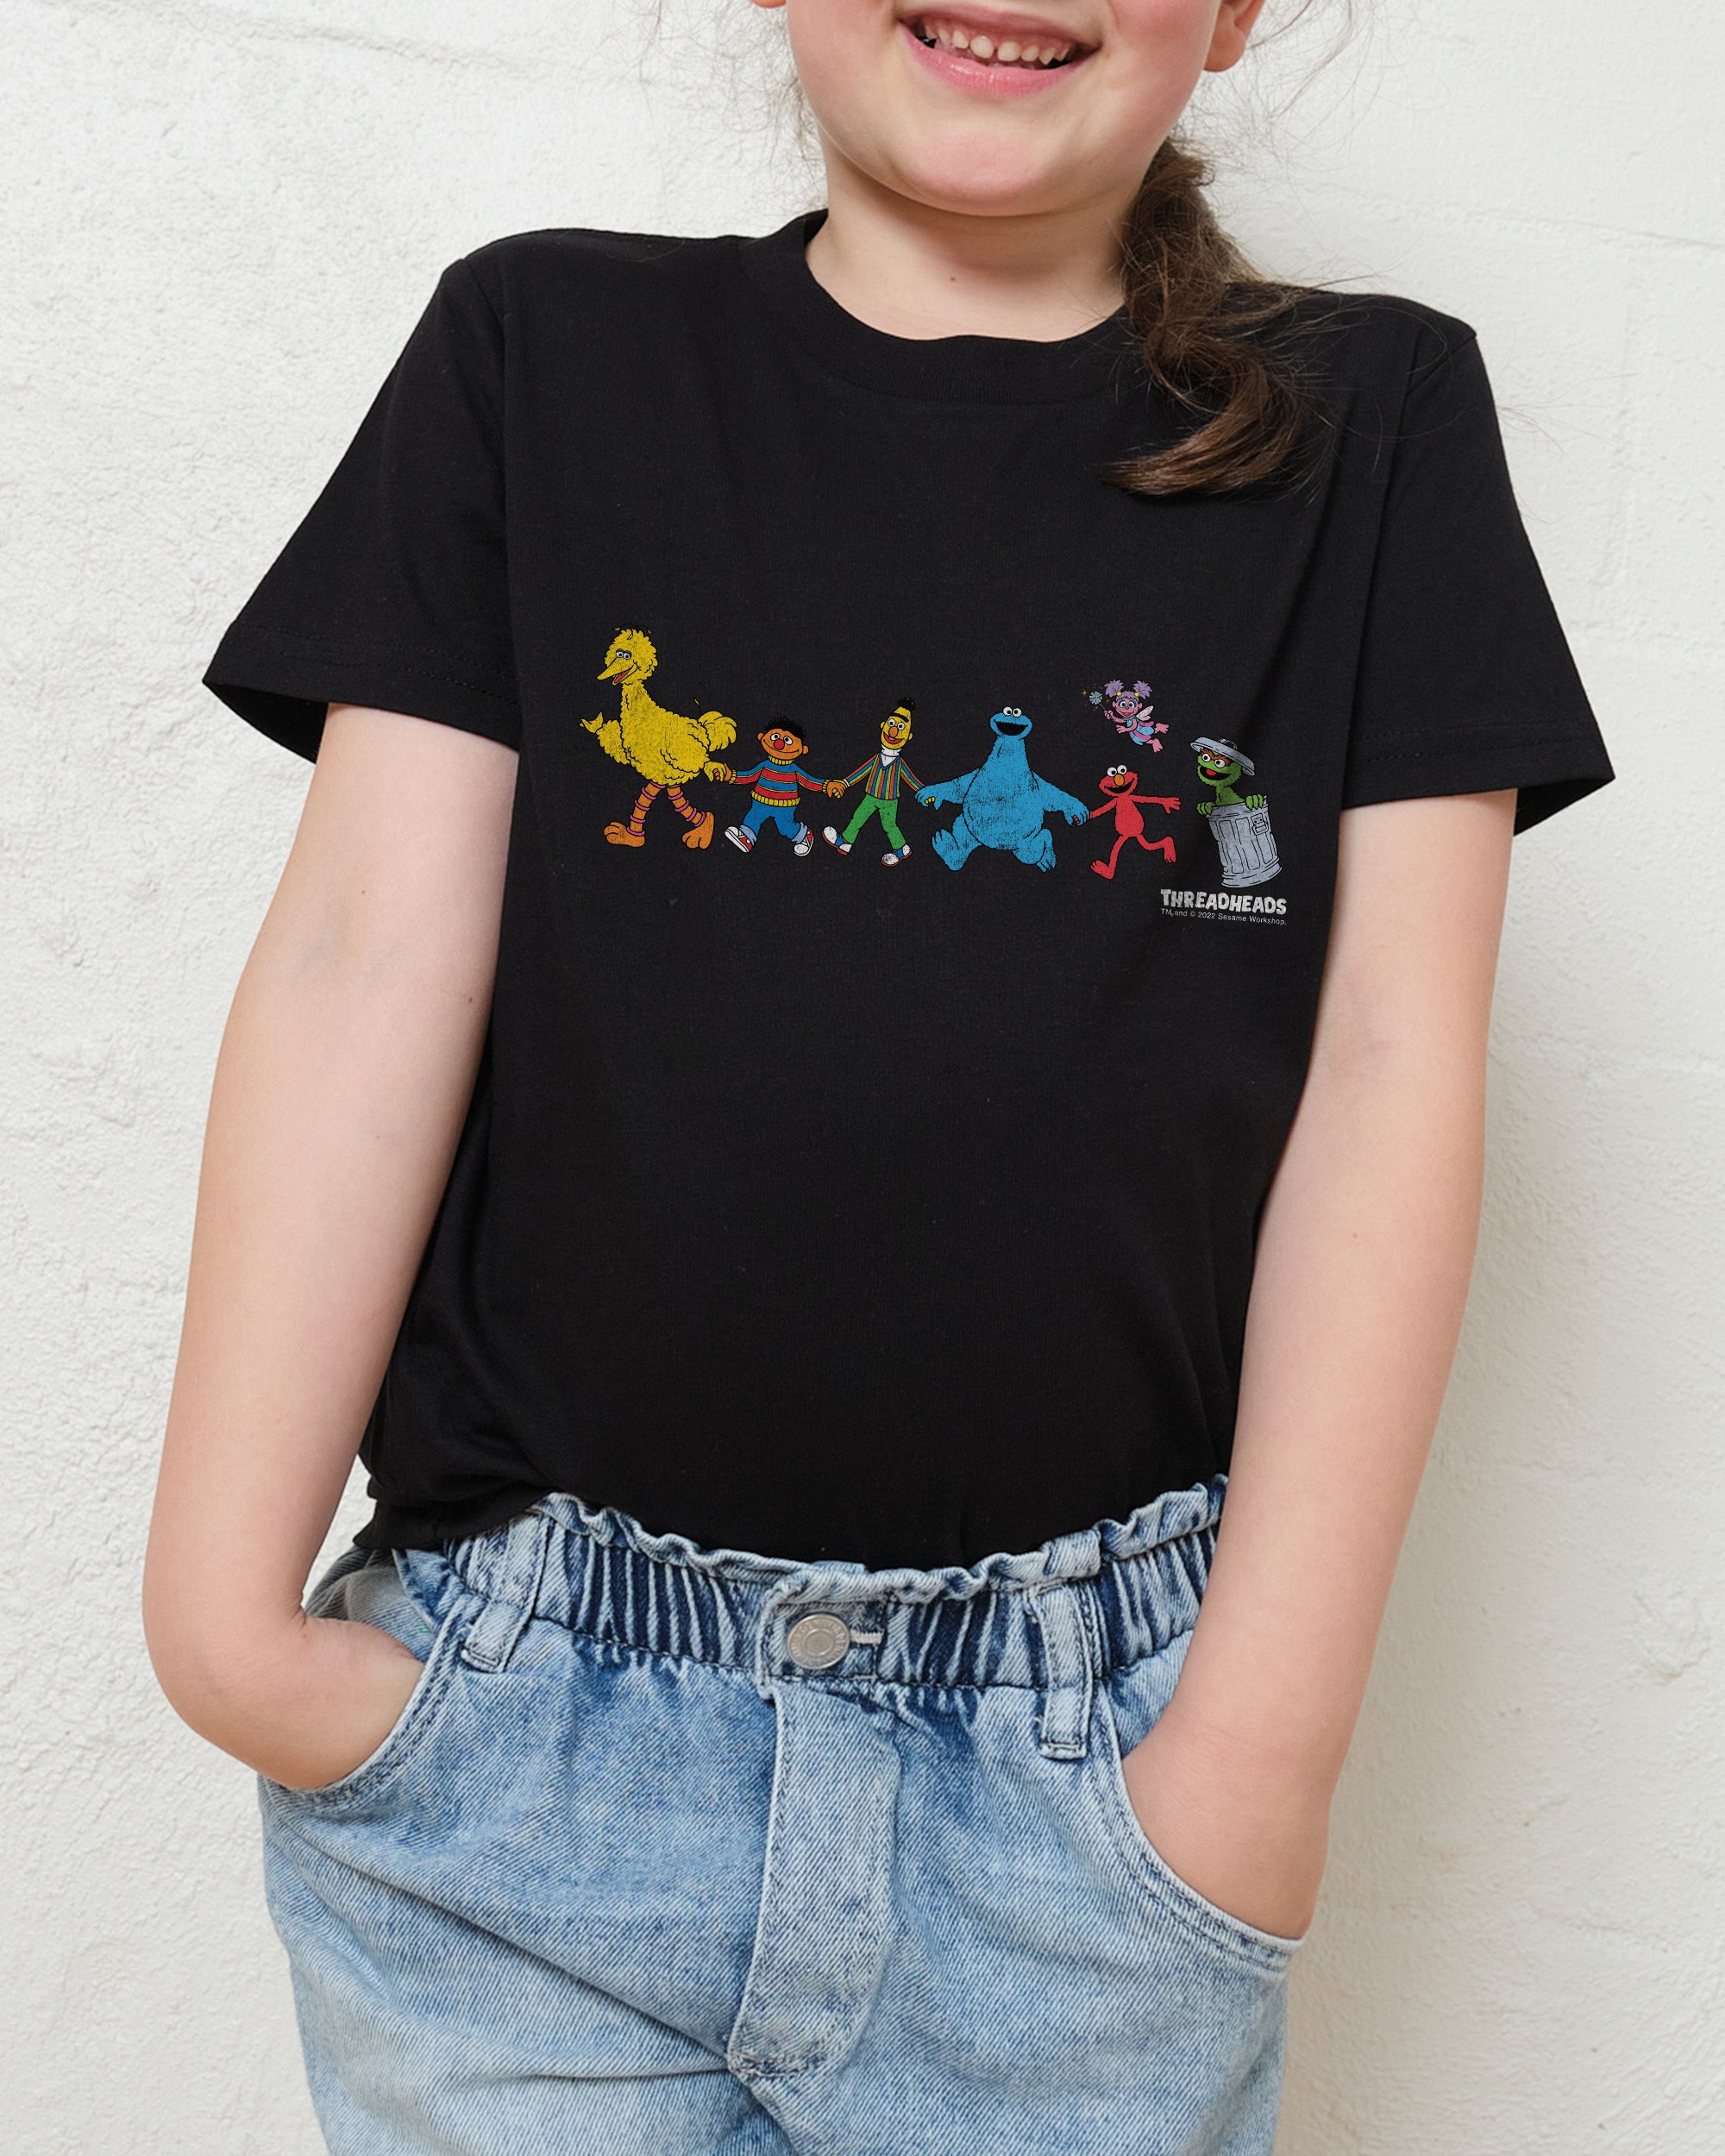 Walk With Me Kids T-Shirt